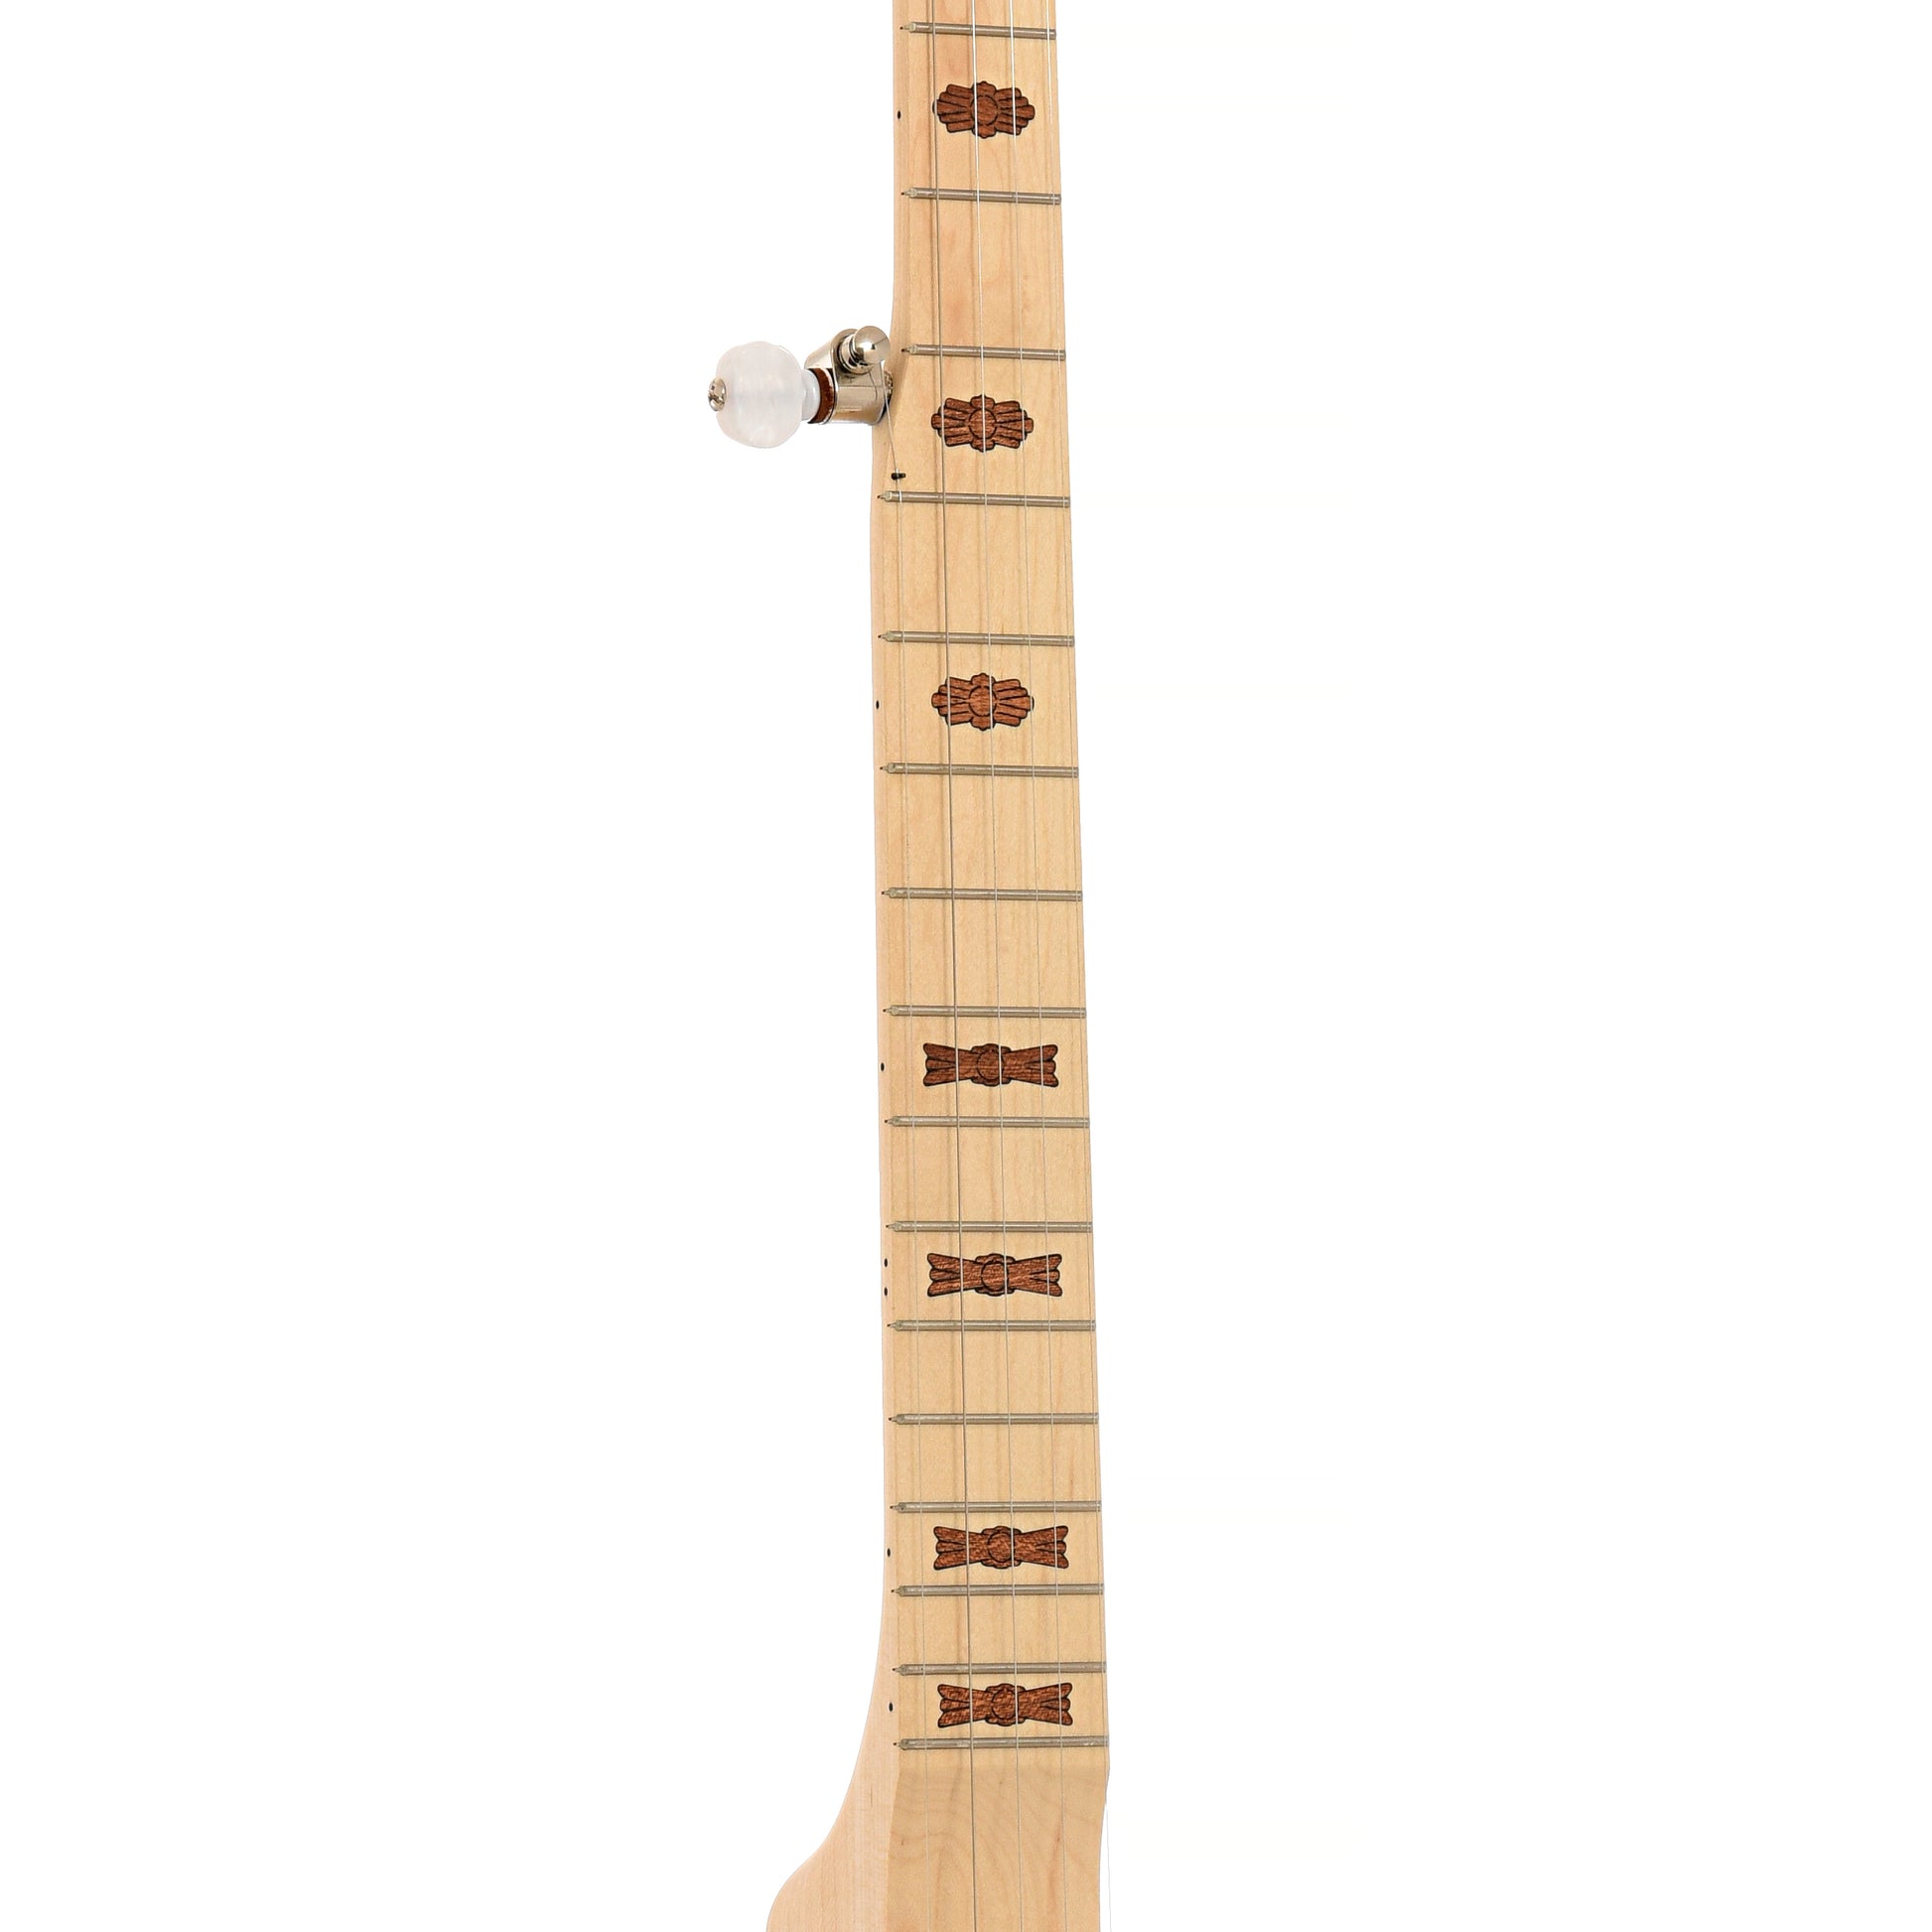 Fretboard of Deering Goodtime Americana Deco 12" Openback Banjo with Scooped Fretboard